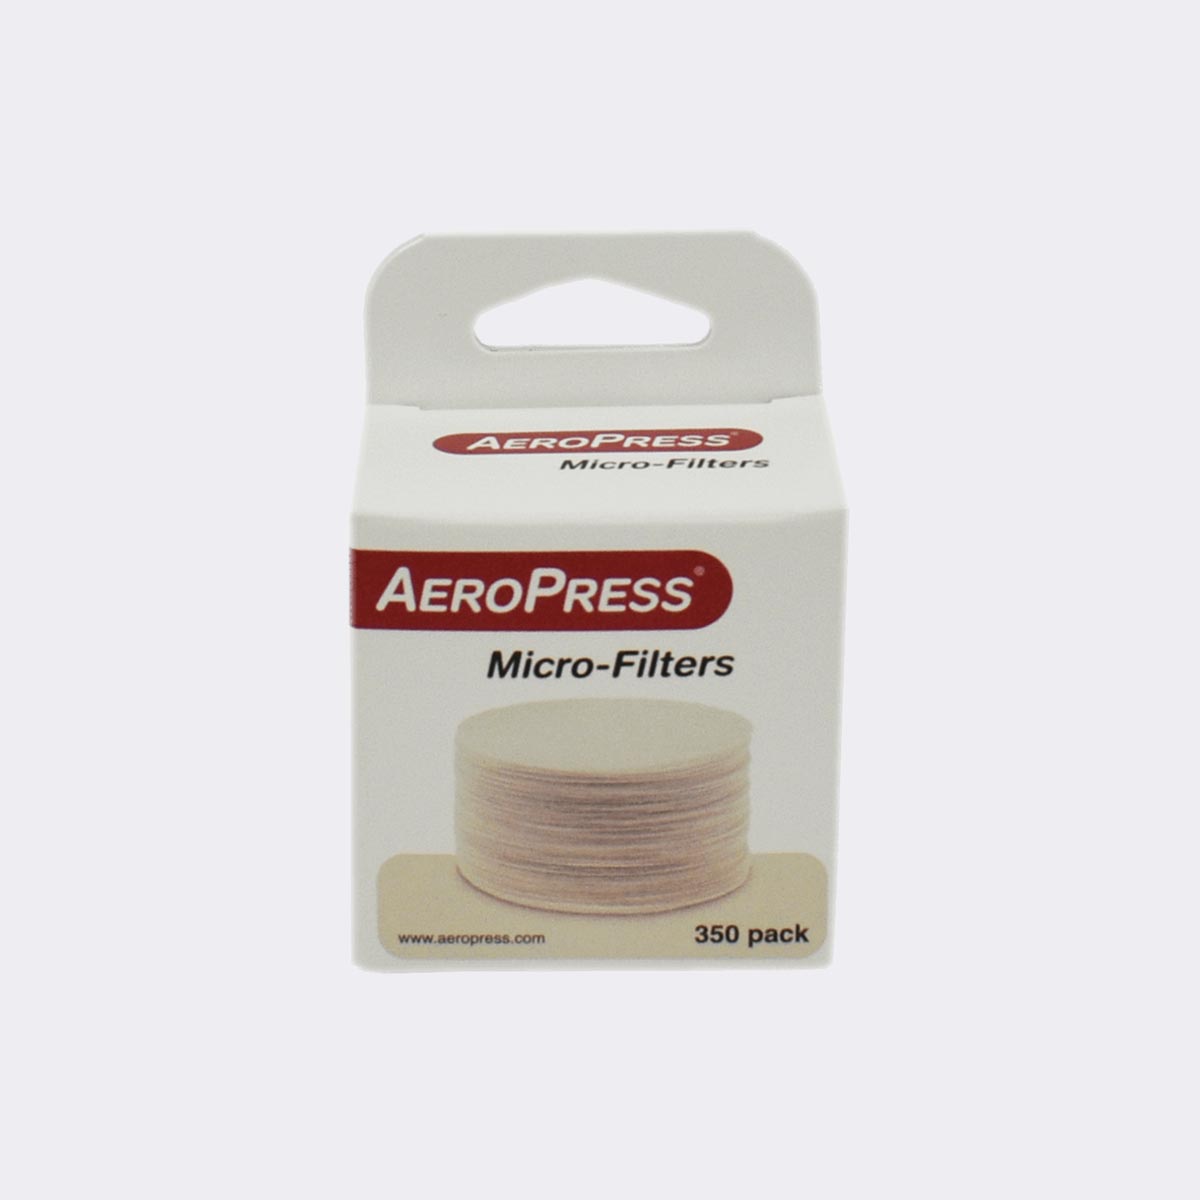 AeroPress Microfilters - pack of 350